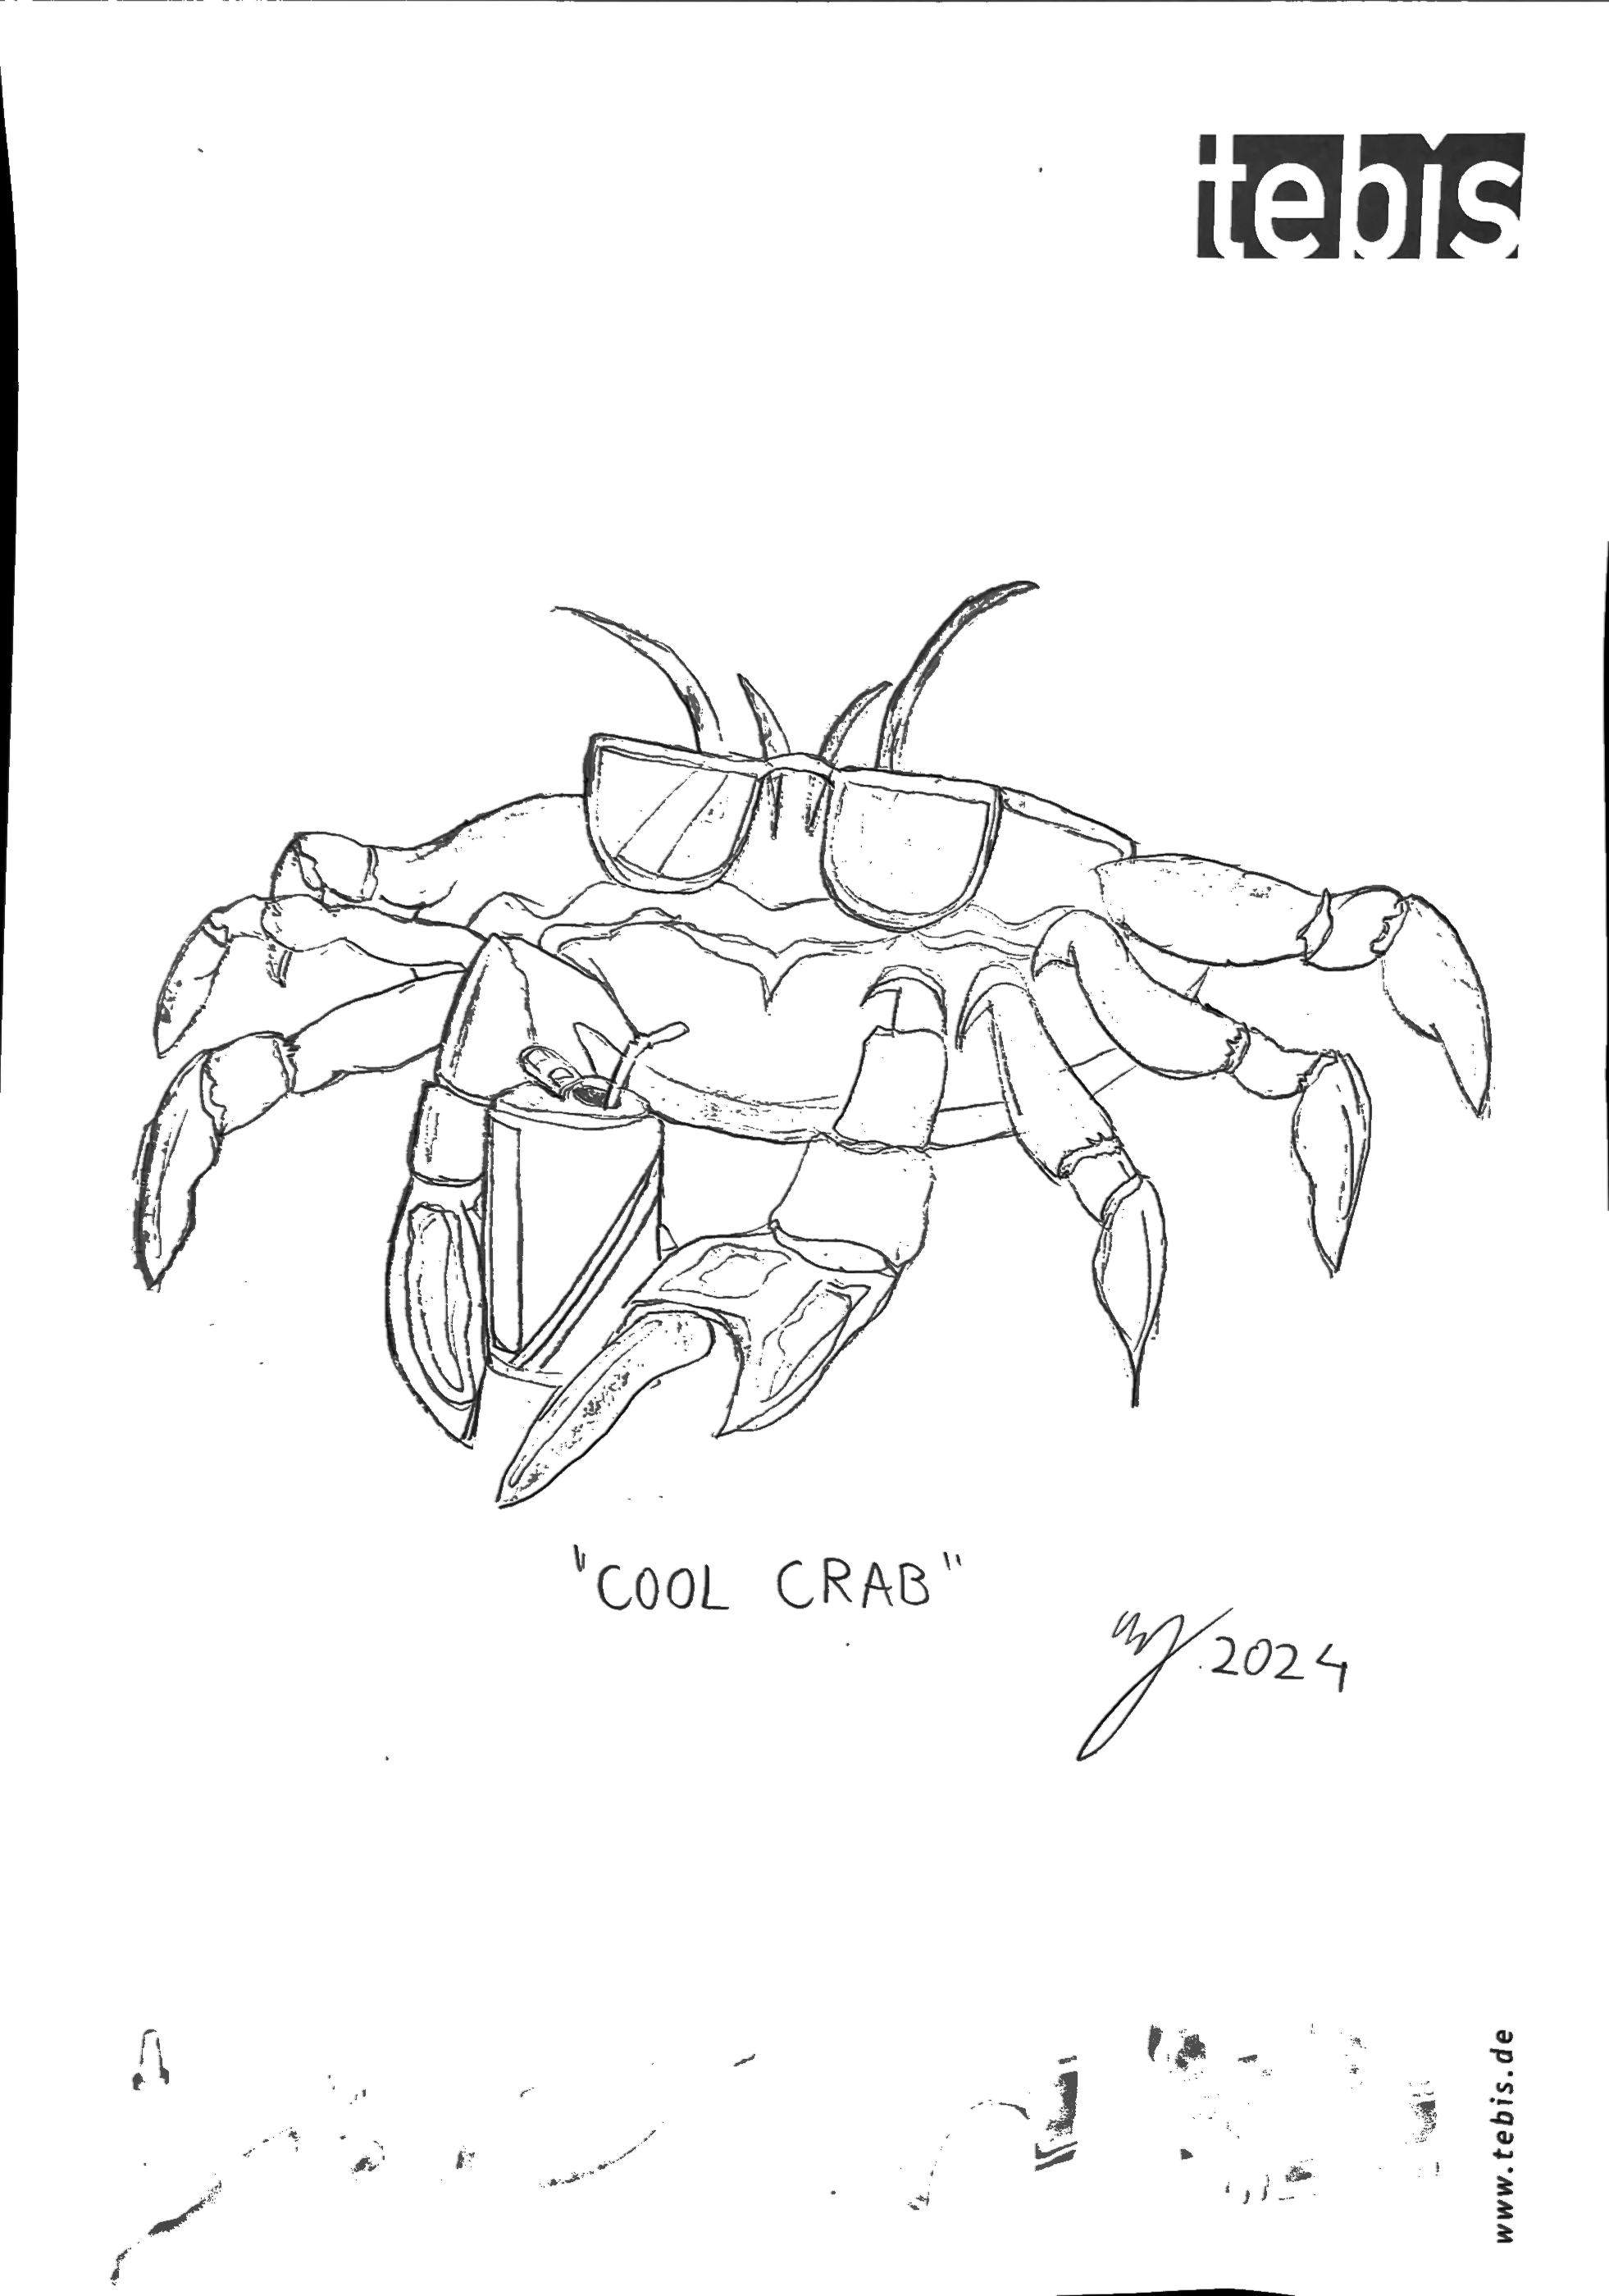 Cool crab.